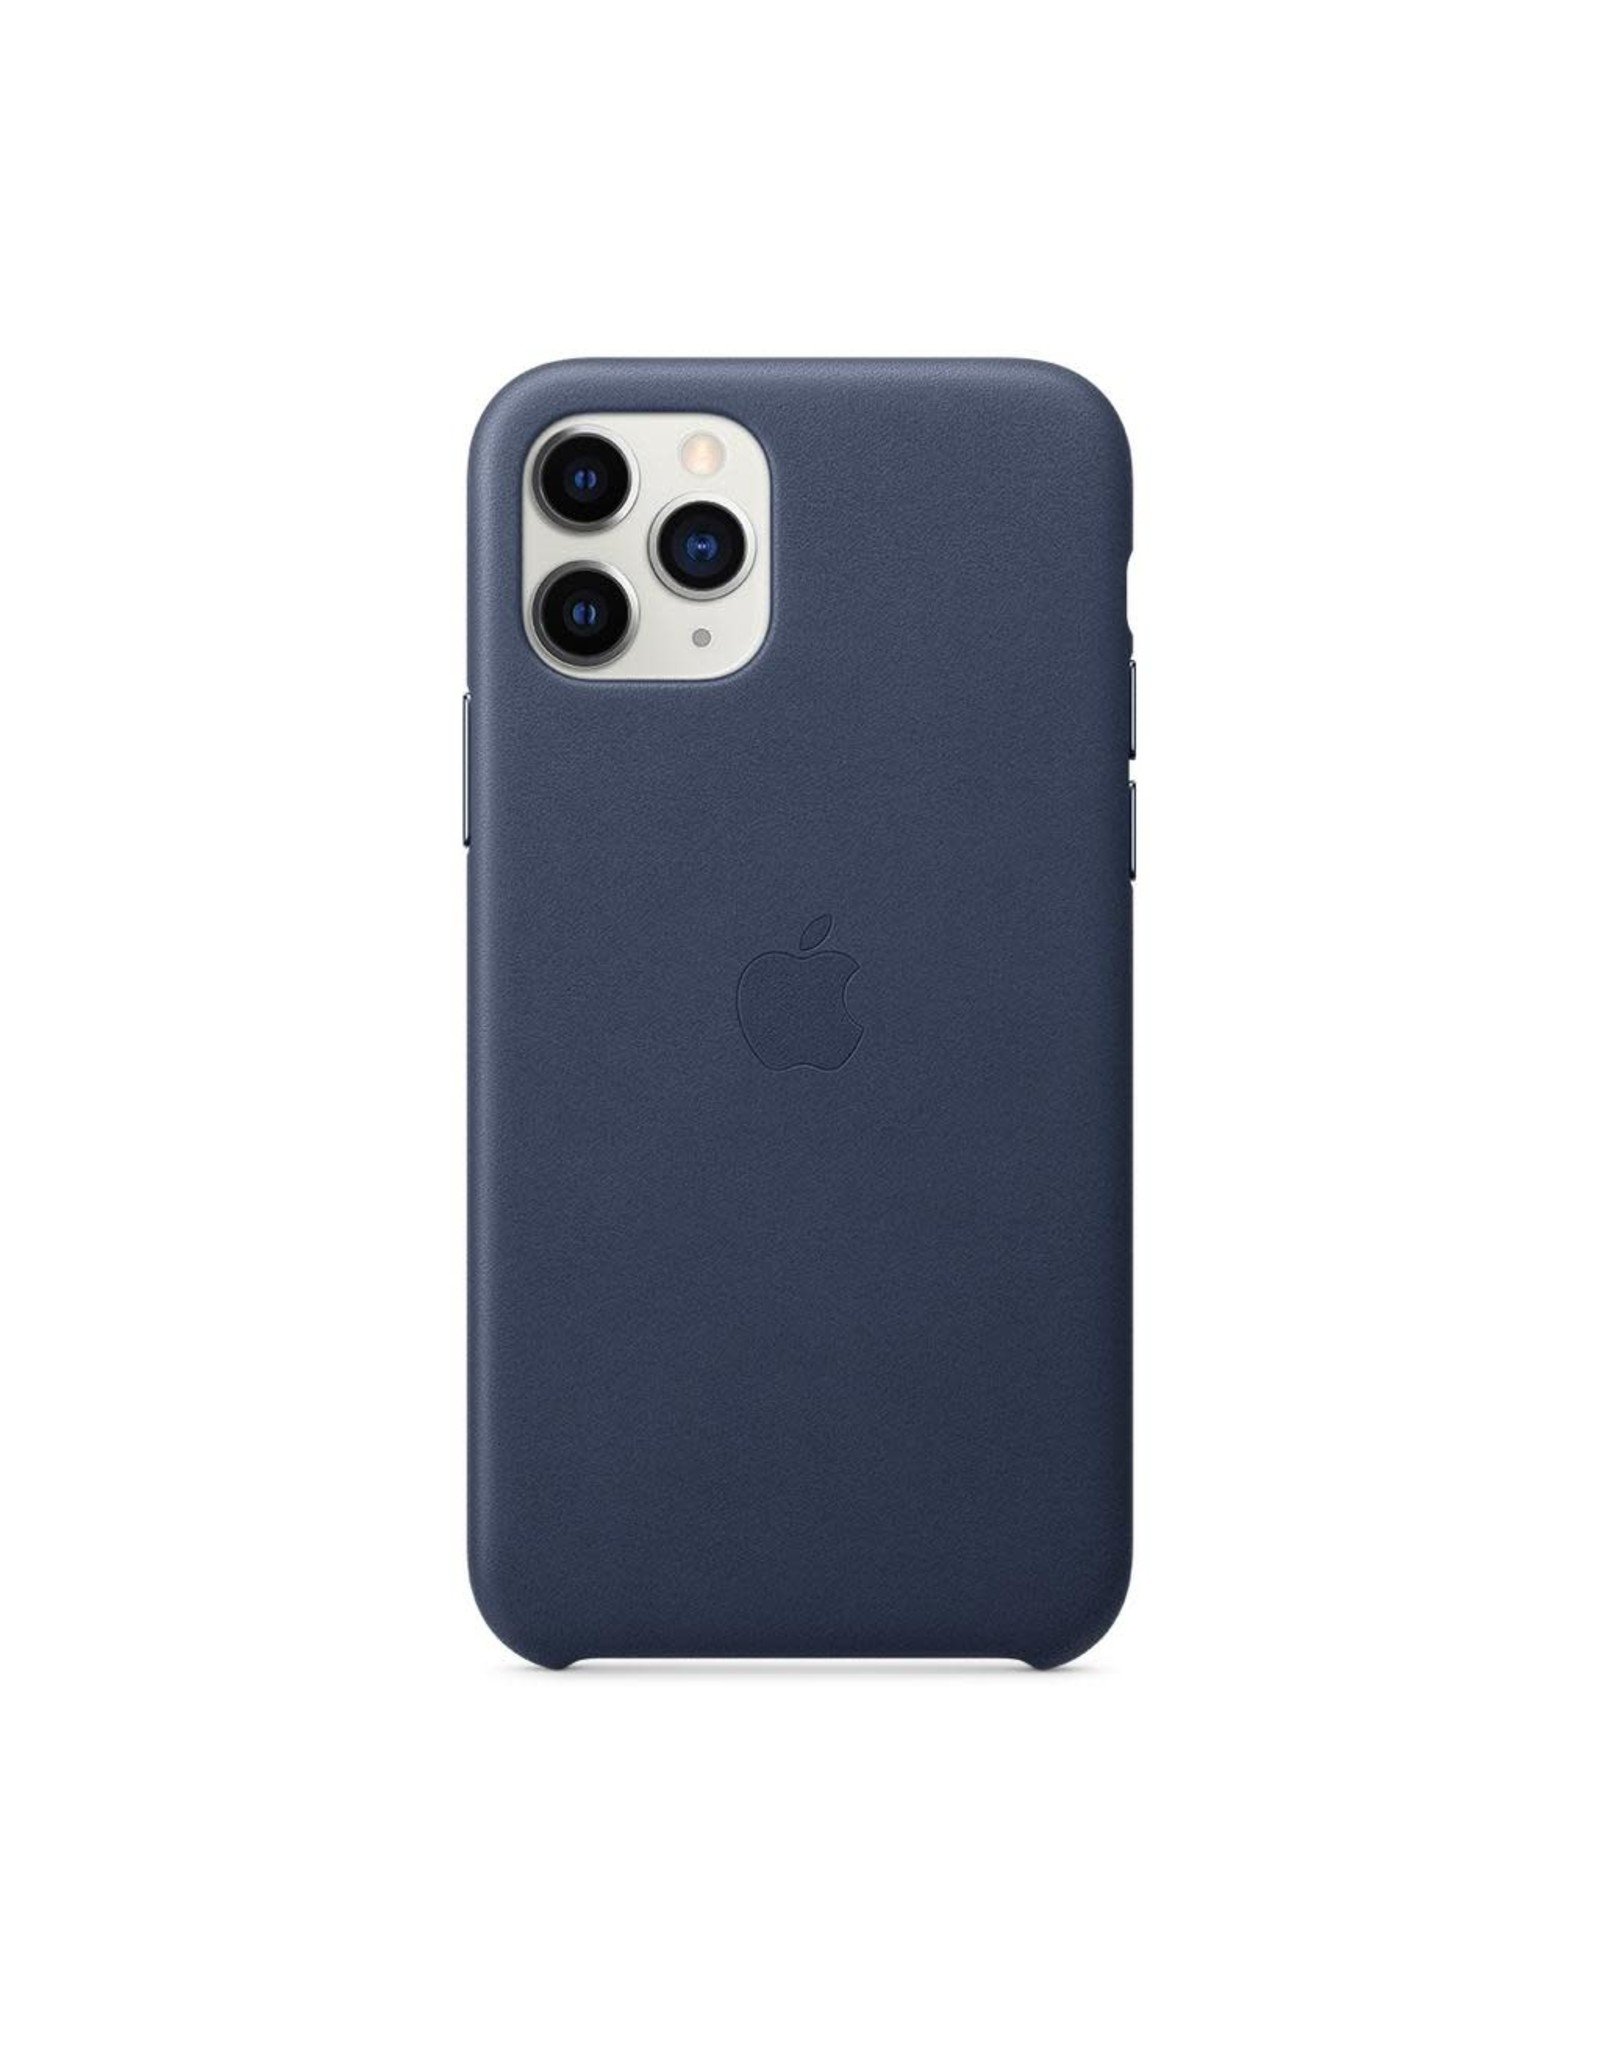 Apple Apple iPhone 11 Pro Leather Case - MIDNIGHT BLUE